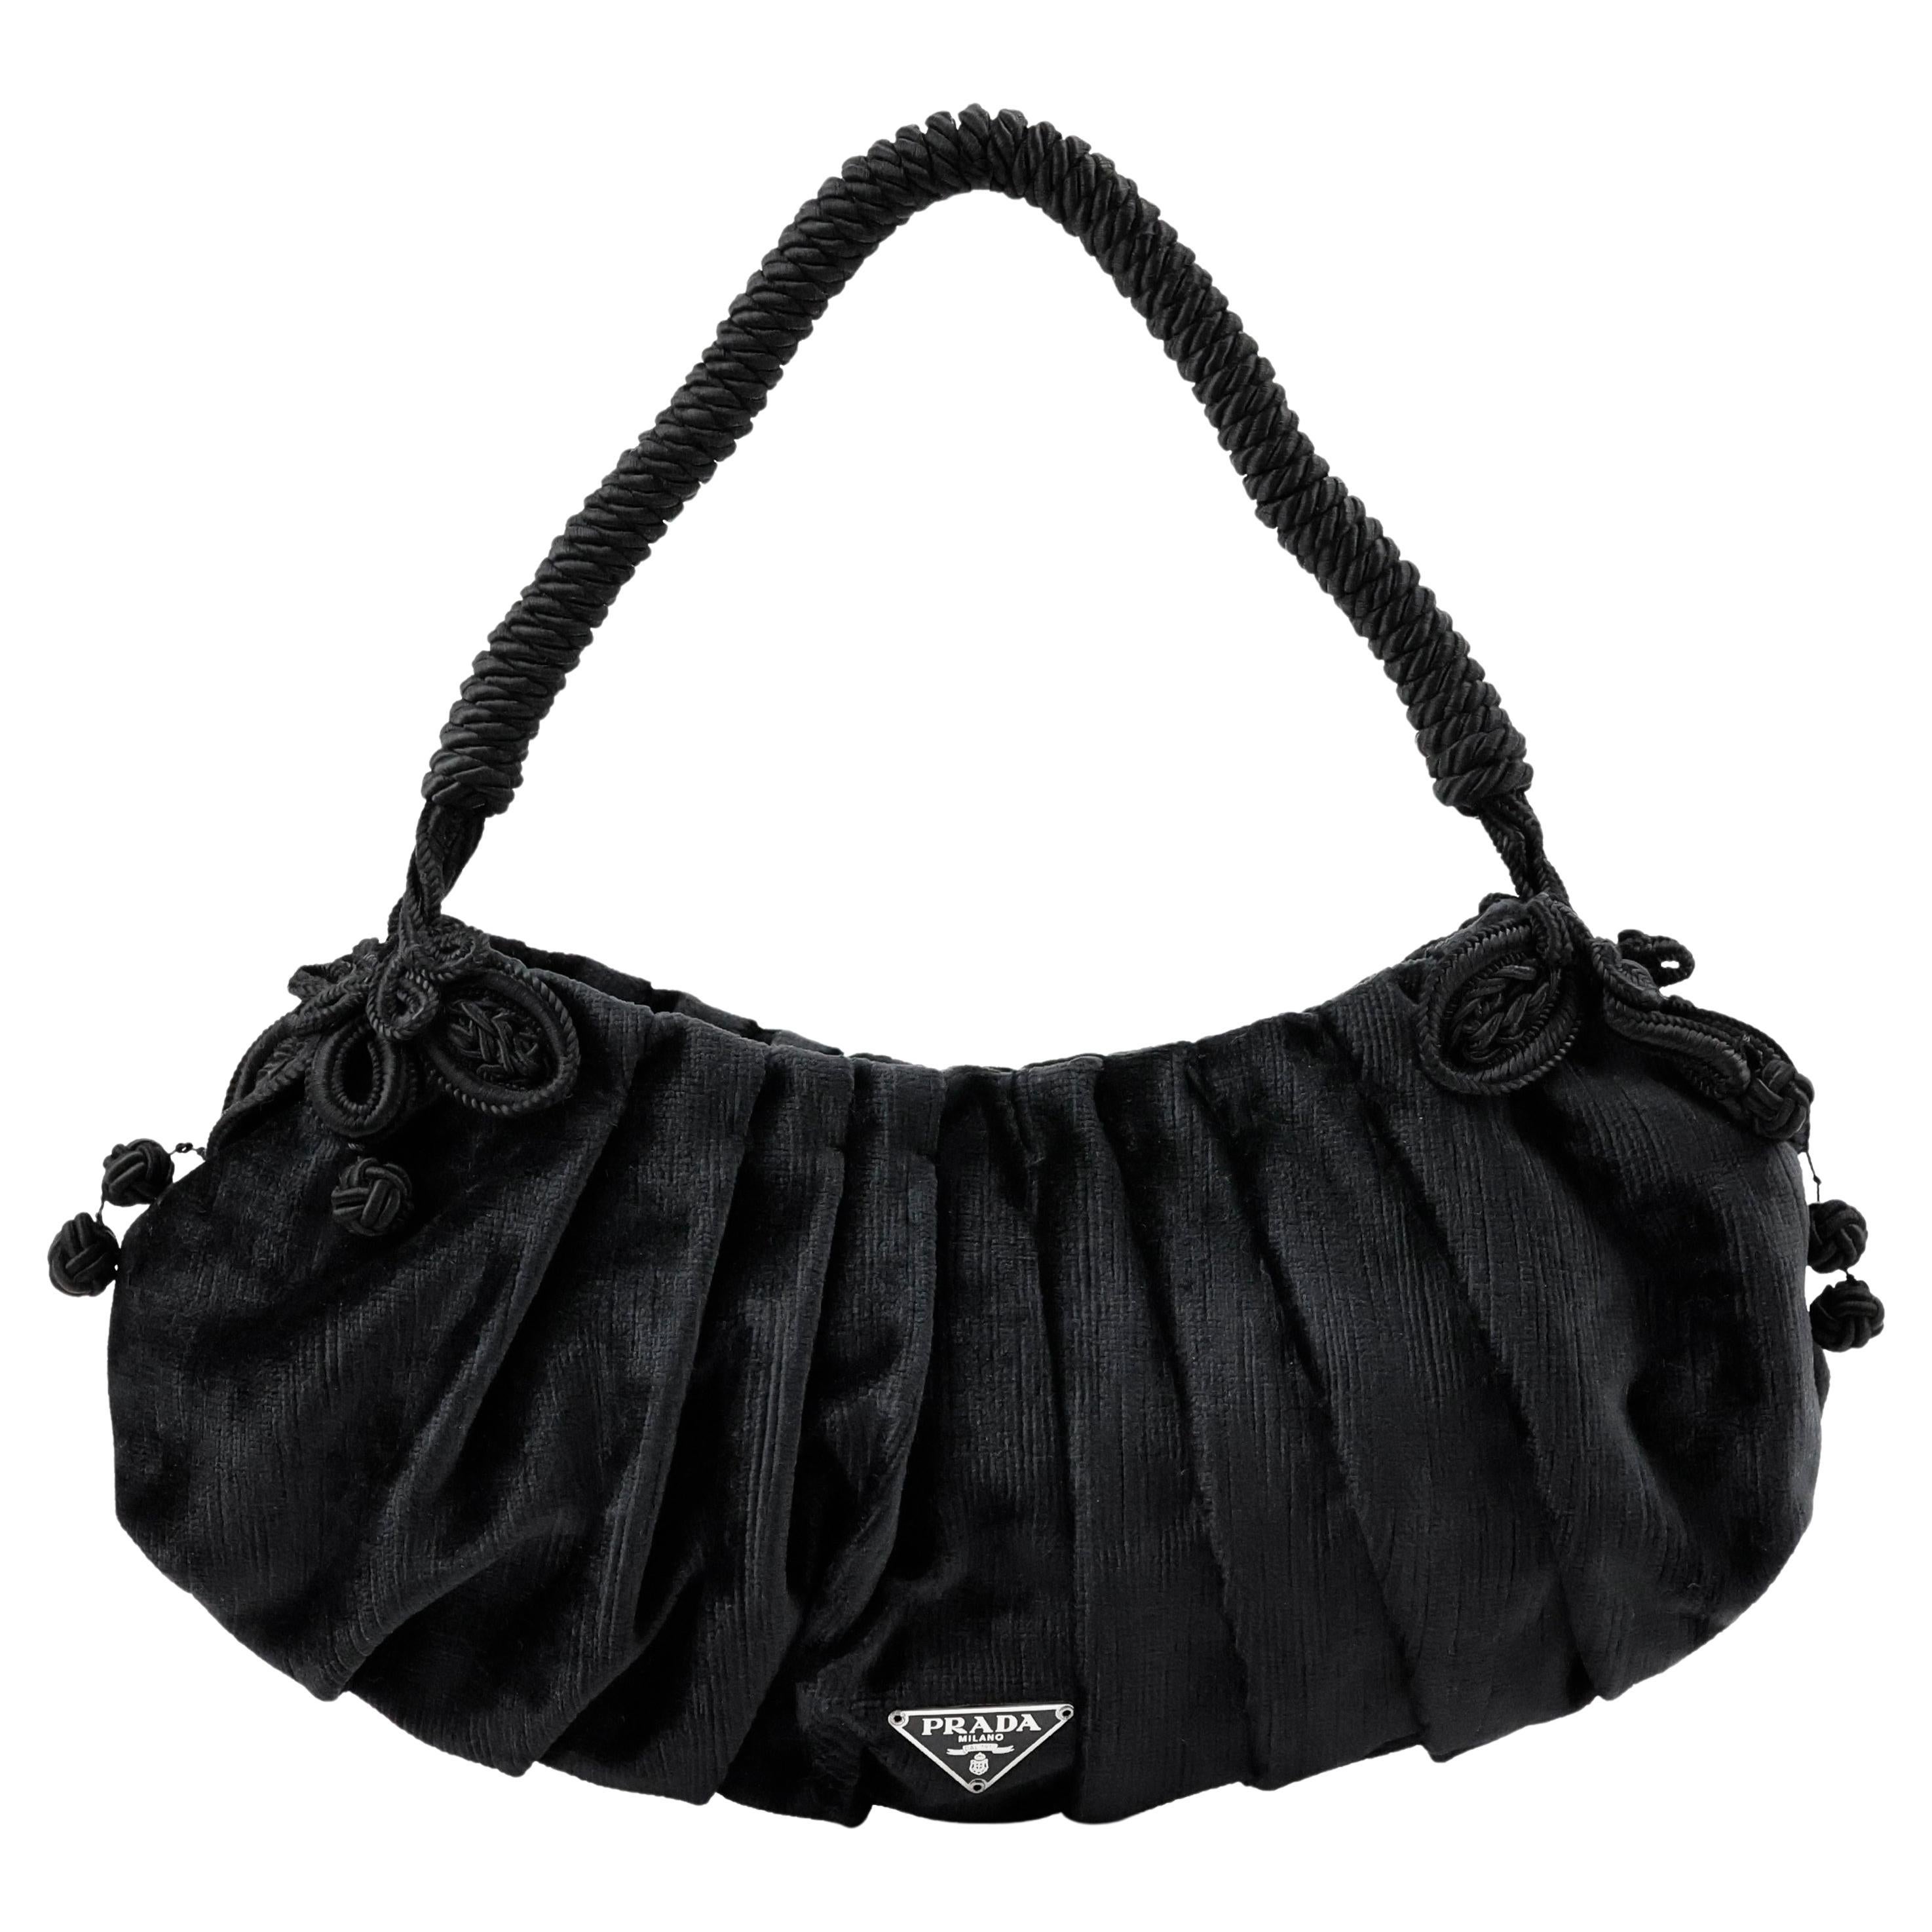 Prada Bag in black embroidered corduroy and silk